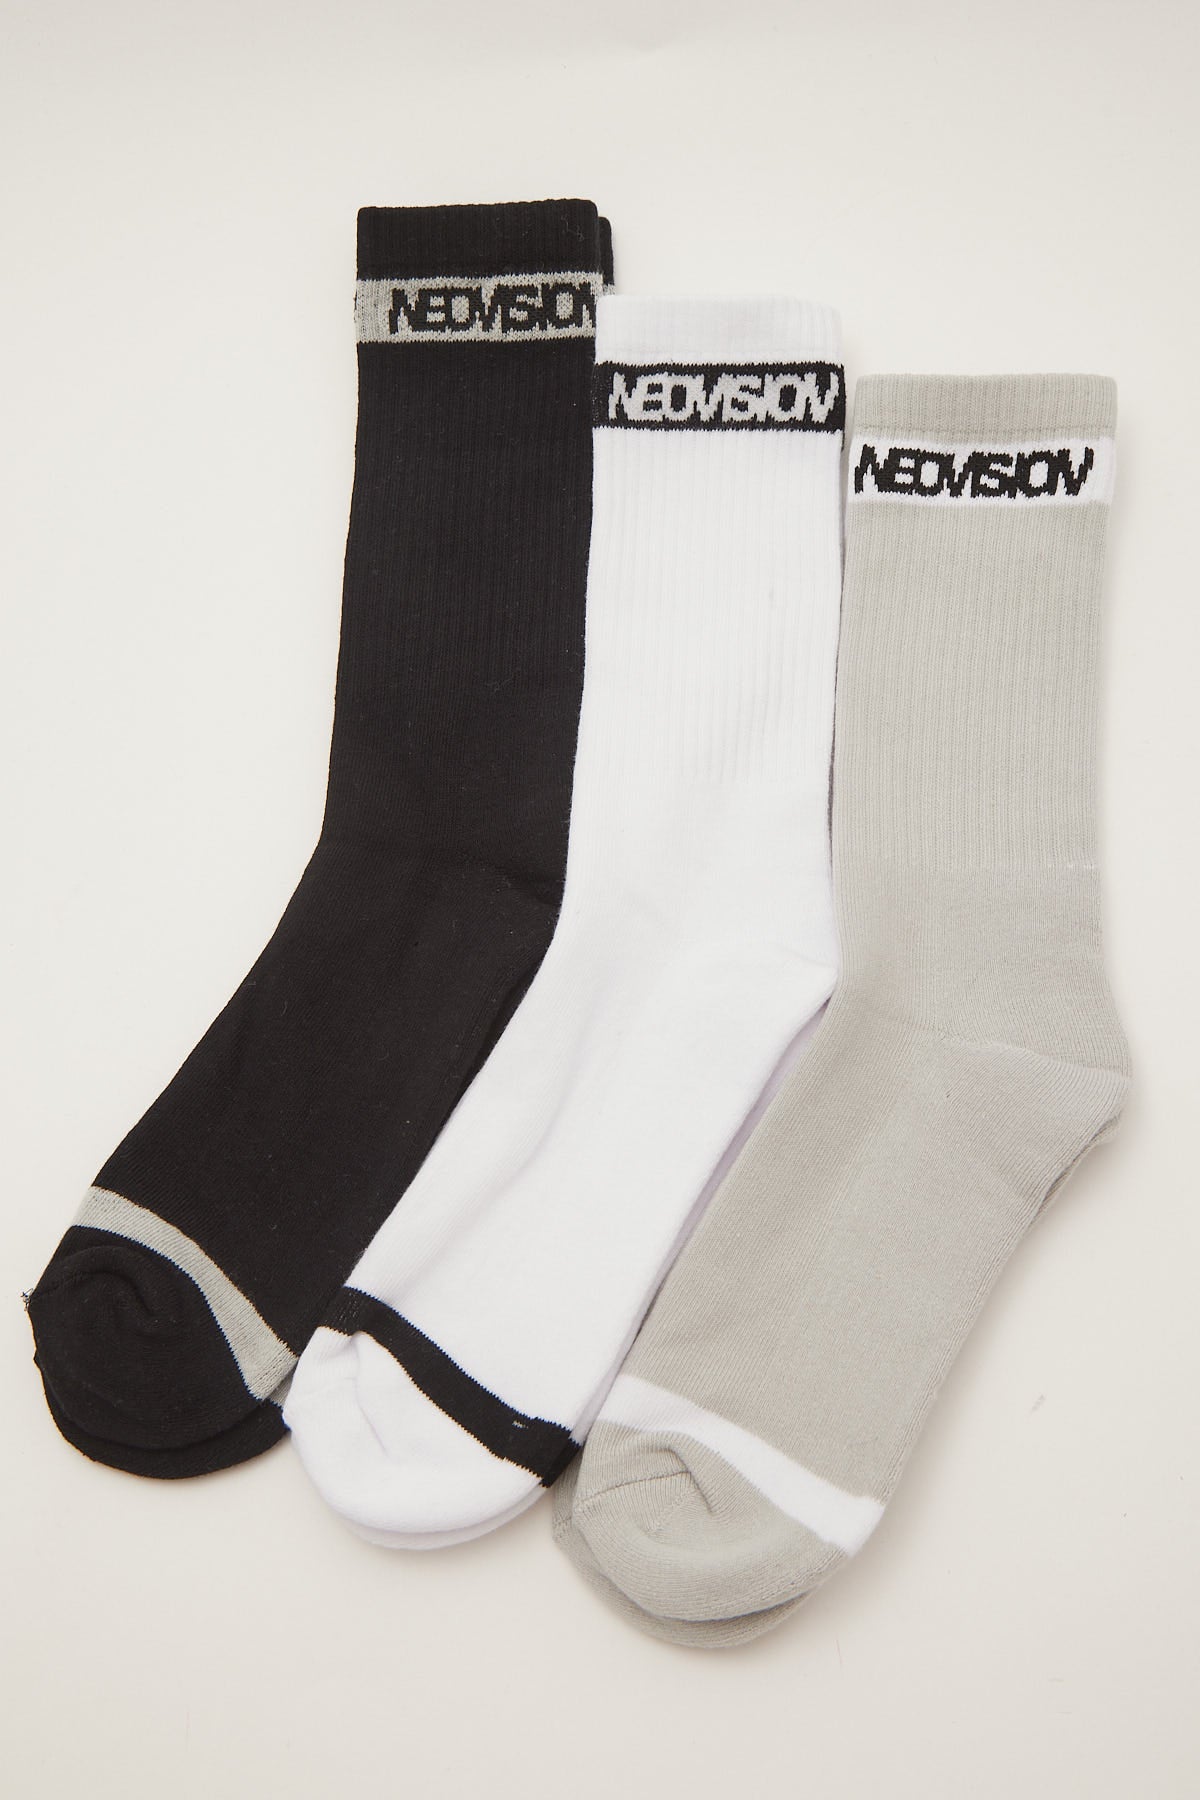 Neovision Traction Sock 3 Pack White/Grey/Black